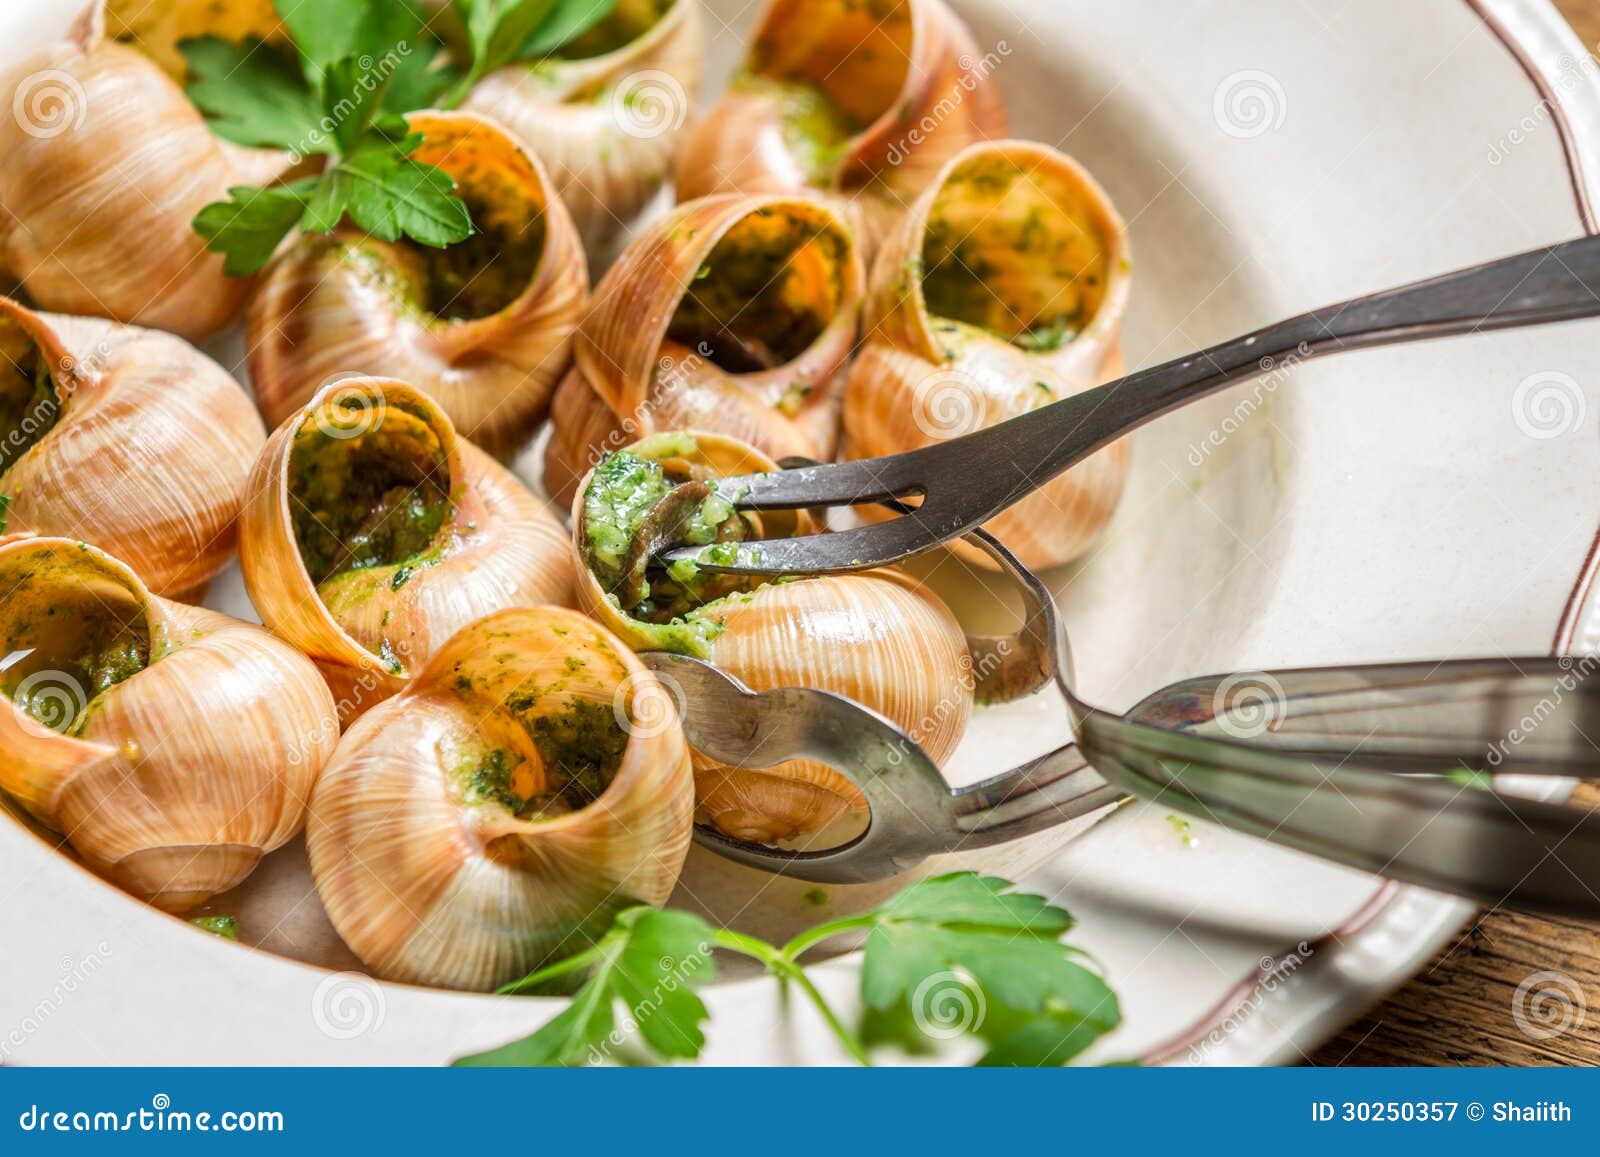 http://thumbs.dreamstime.com/z/closeup-eating-fried-snails-garlic-butter-old-plate-30250357.jpg